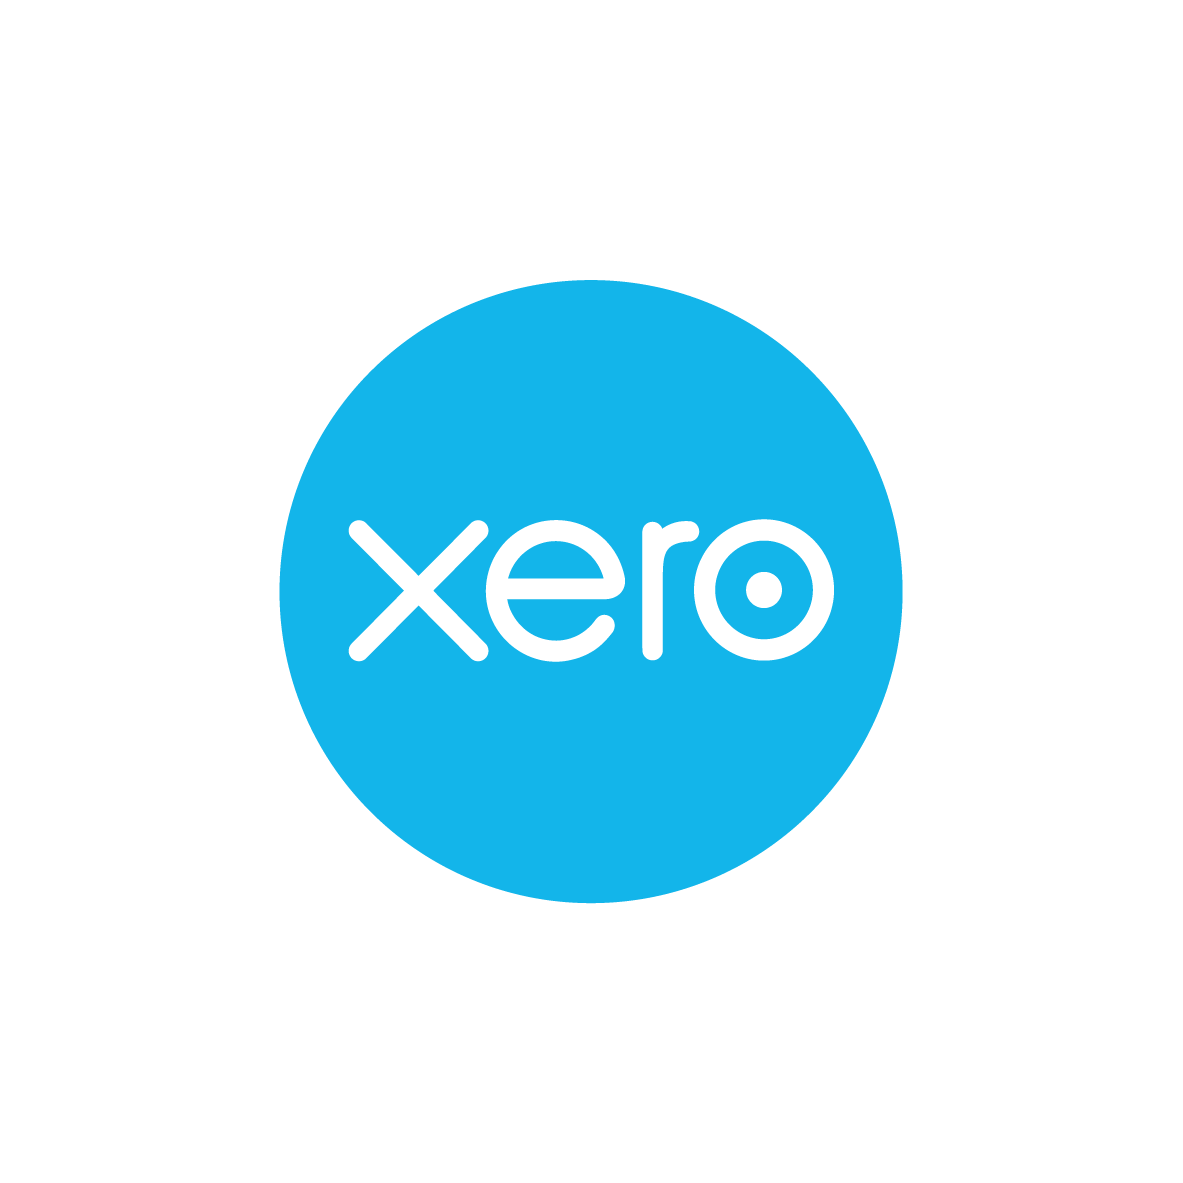 Xero - AG Associates from Cork is a Xero Accountant